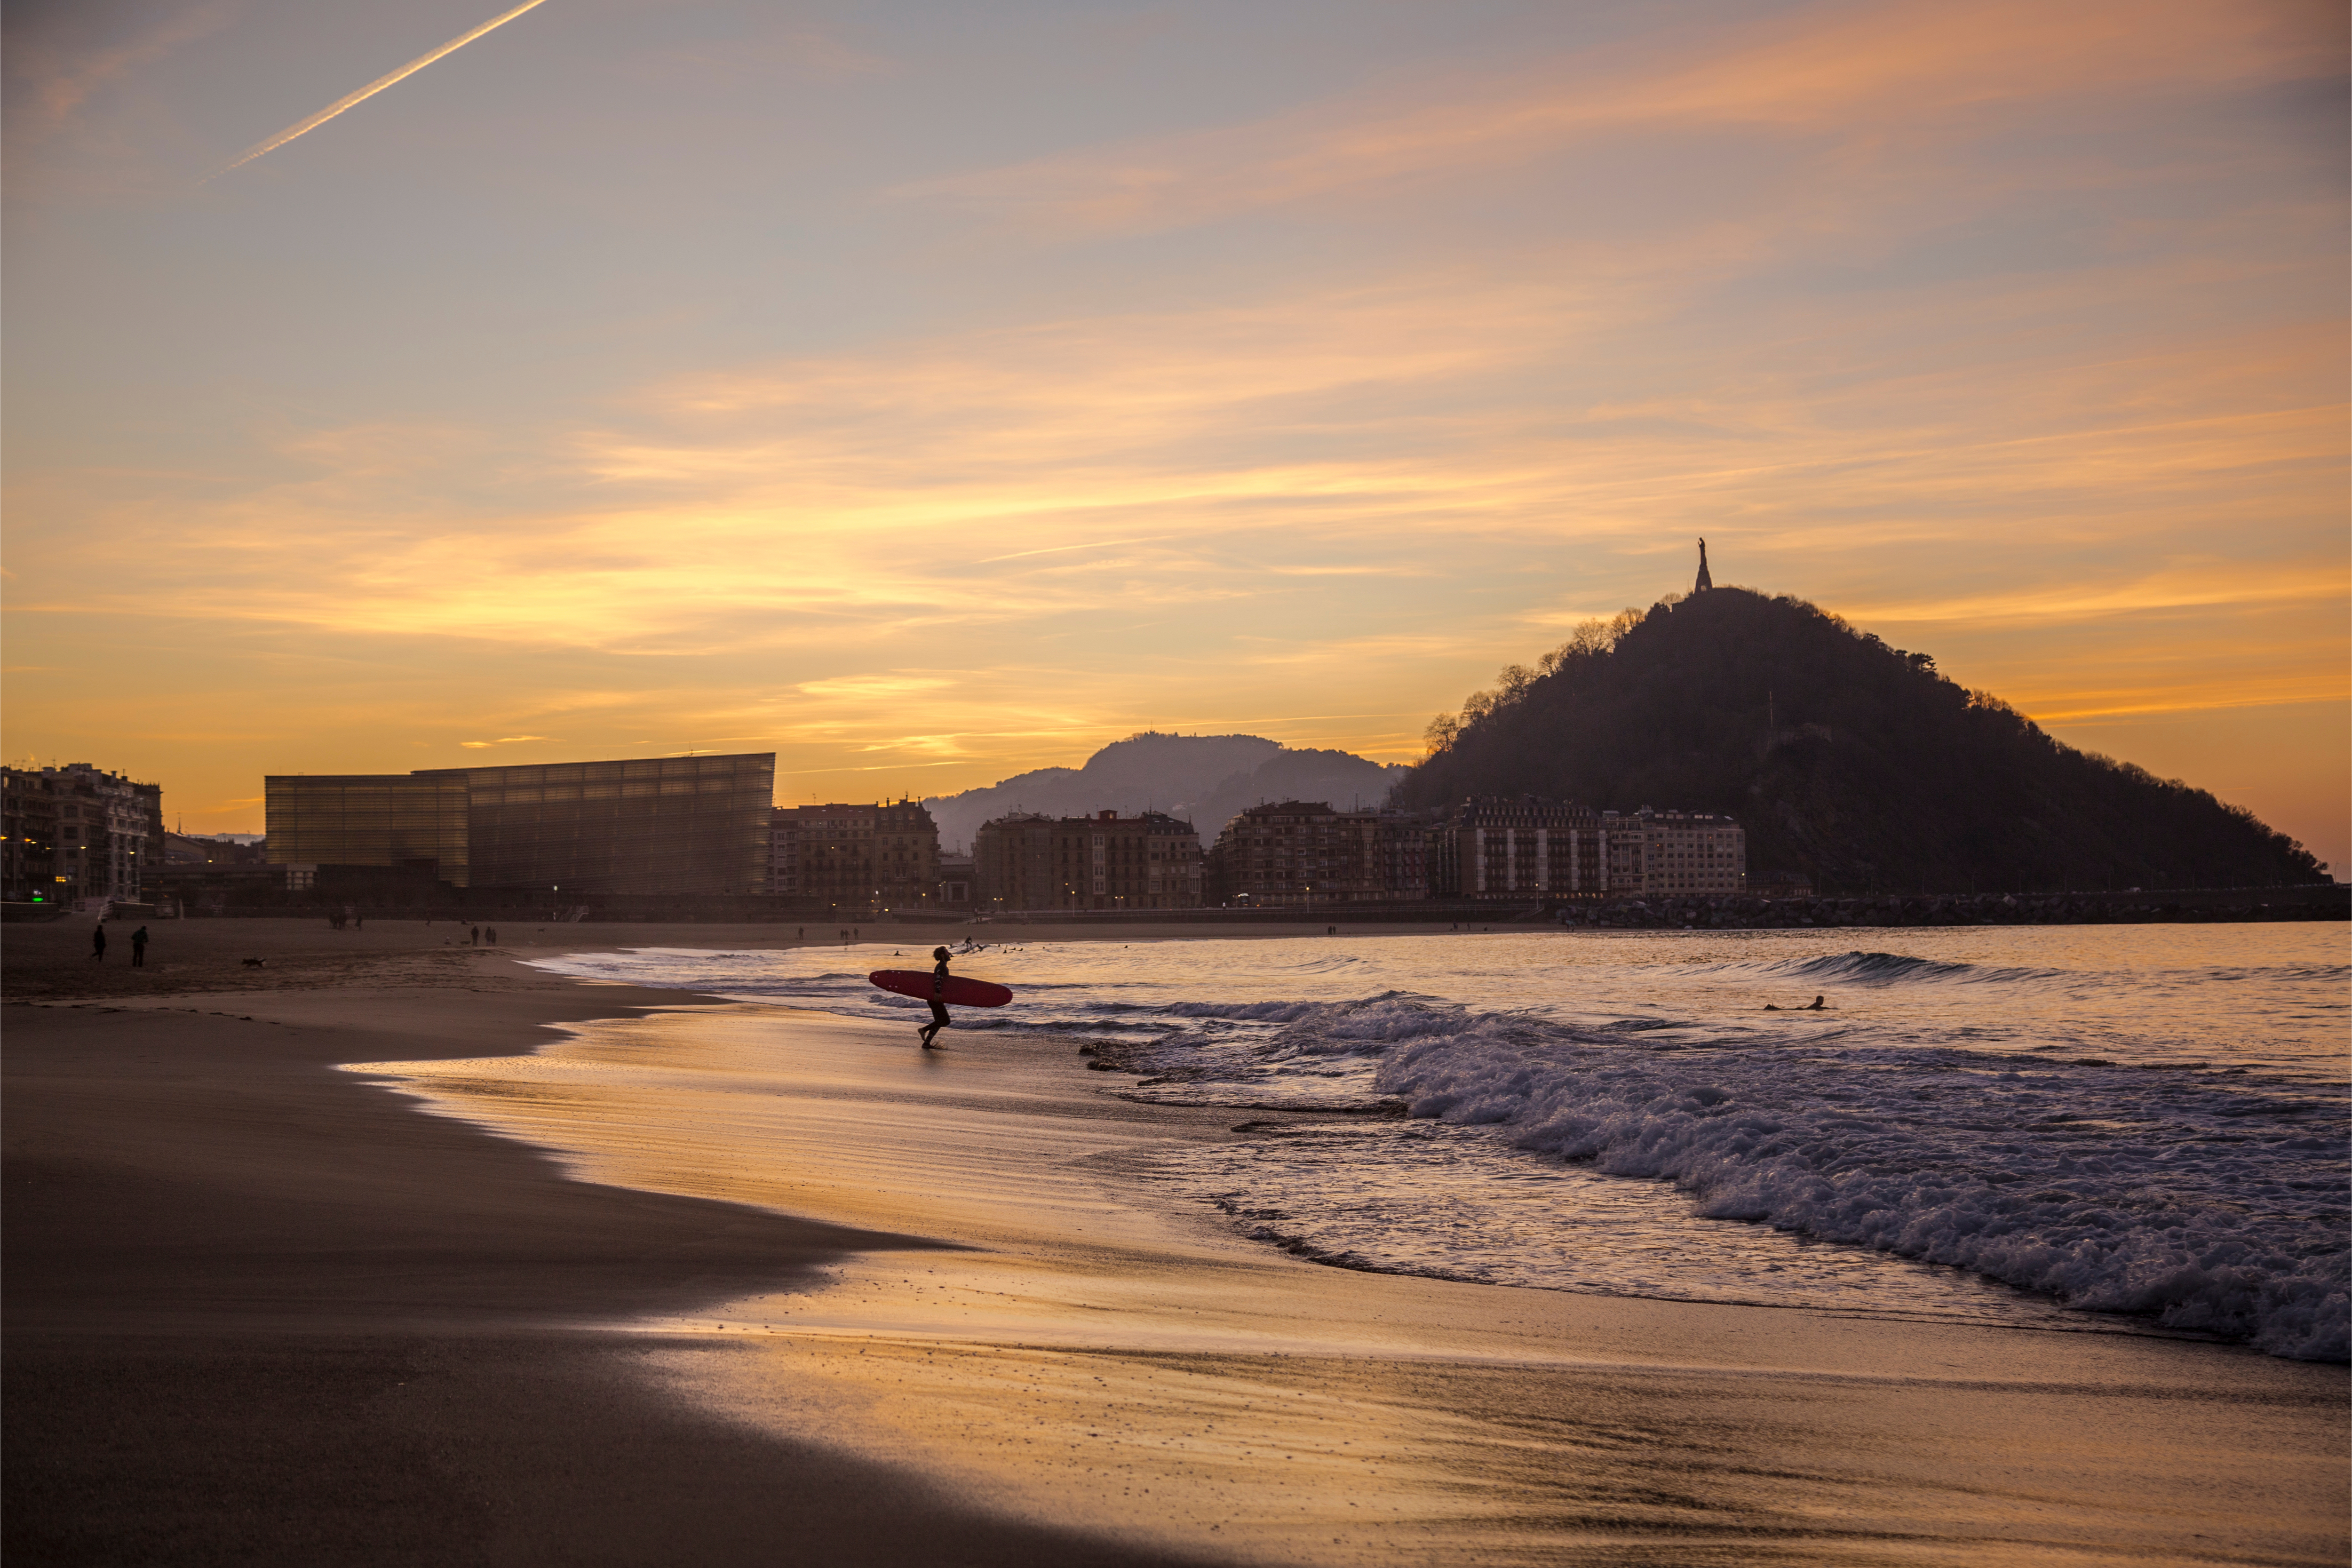 Surfer on beach at San Sebastian (Image: Unai Huizi Photography/Shutterstock)